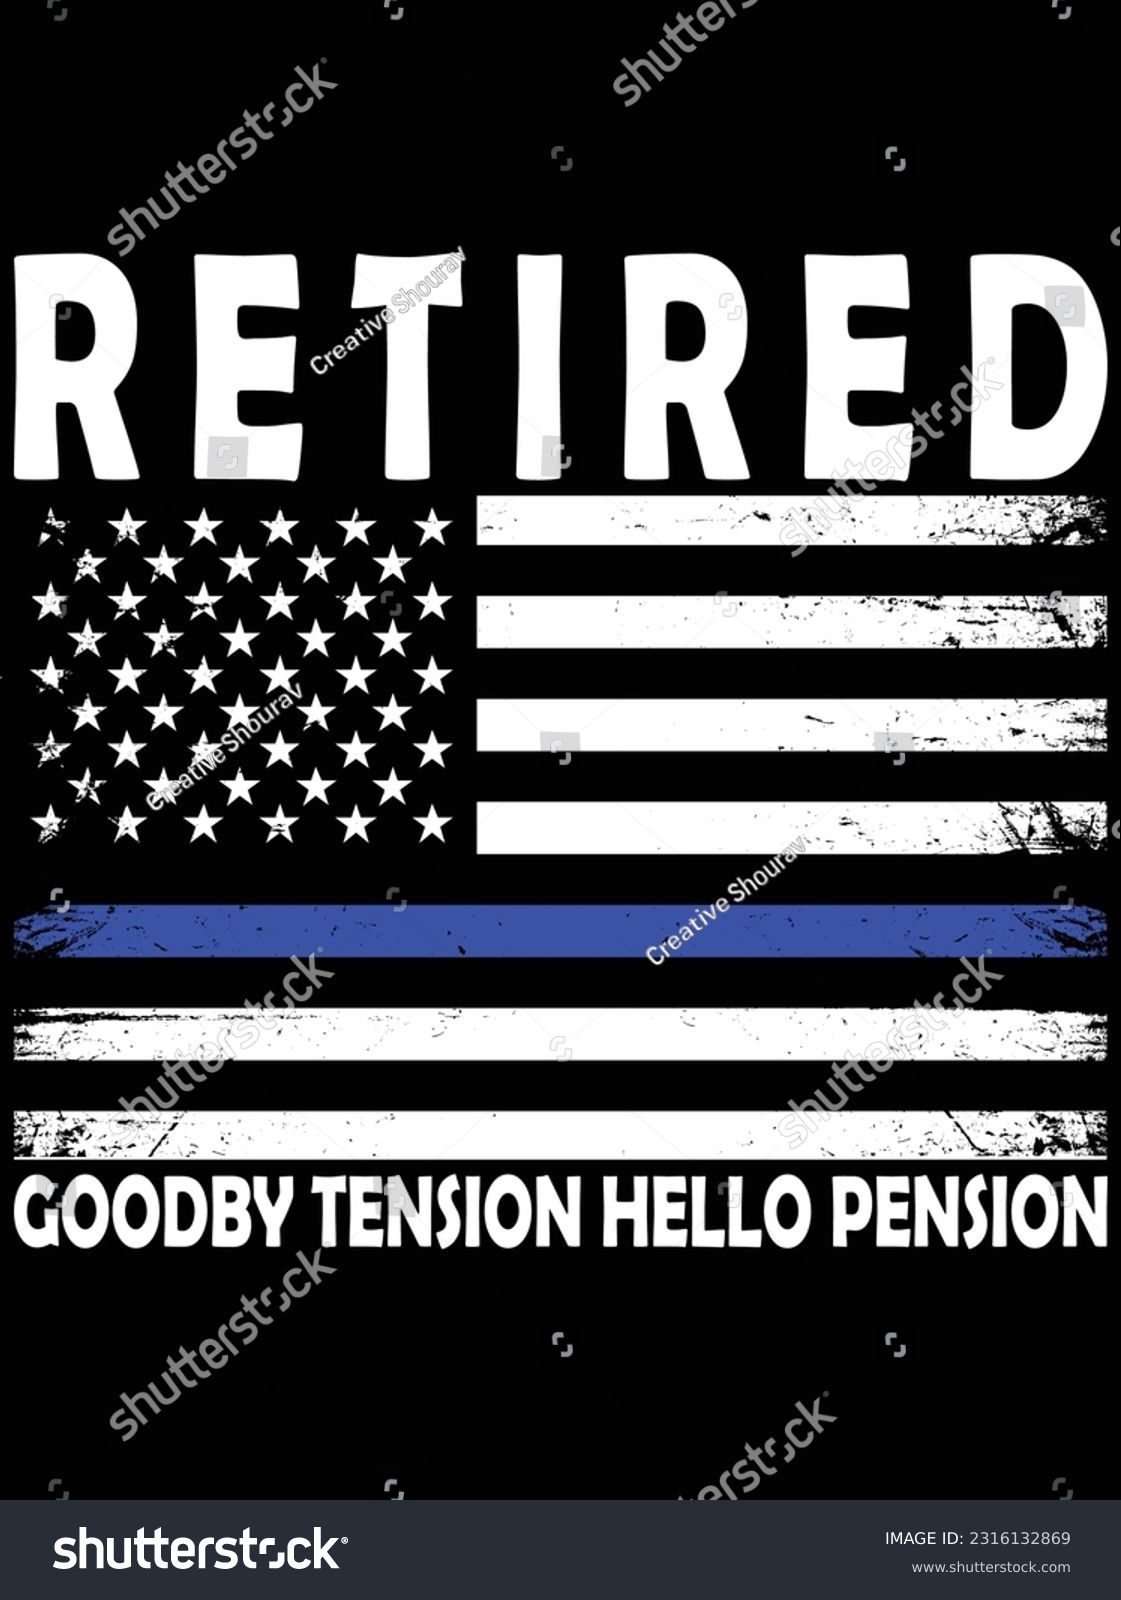 SVG of Retired goodbye tension hello pension vector art design, eps file. design file for t-shirt. SVG, EPS cuttable design file svg